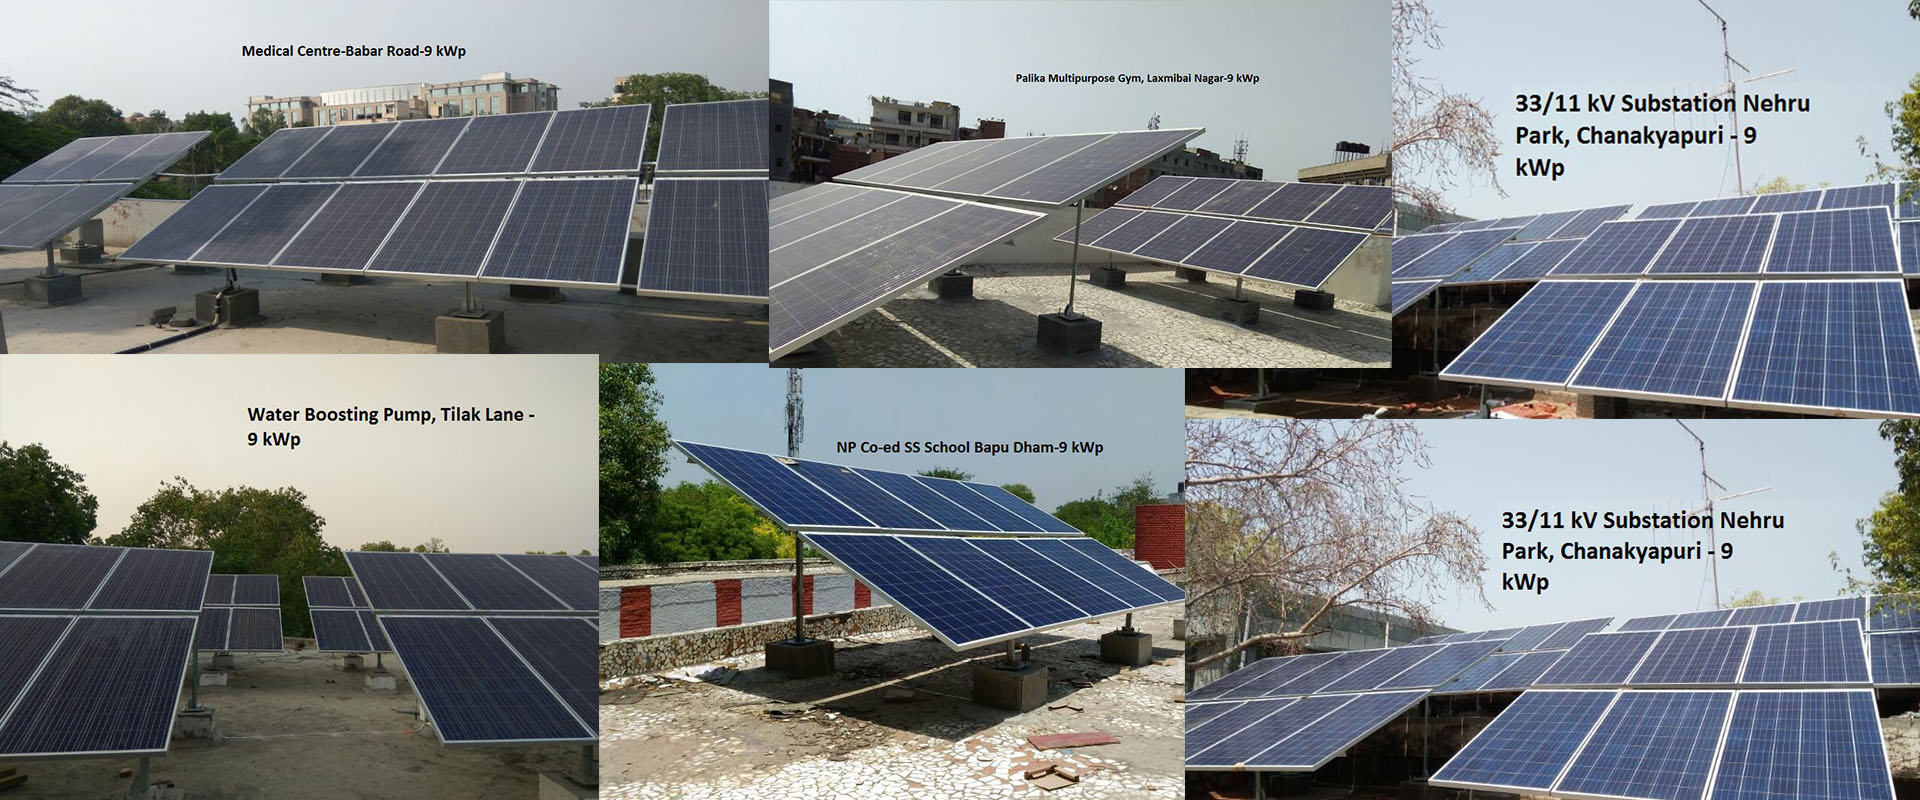 1.4 MWp rooftop solar plants at New Delhi Municipal Corporation